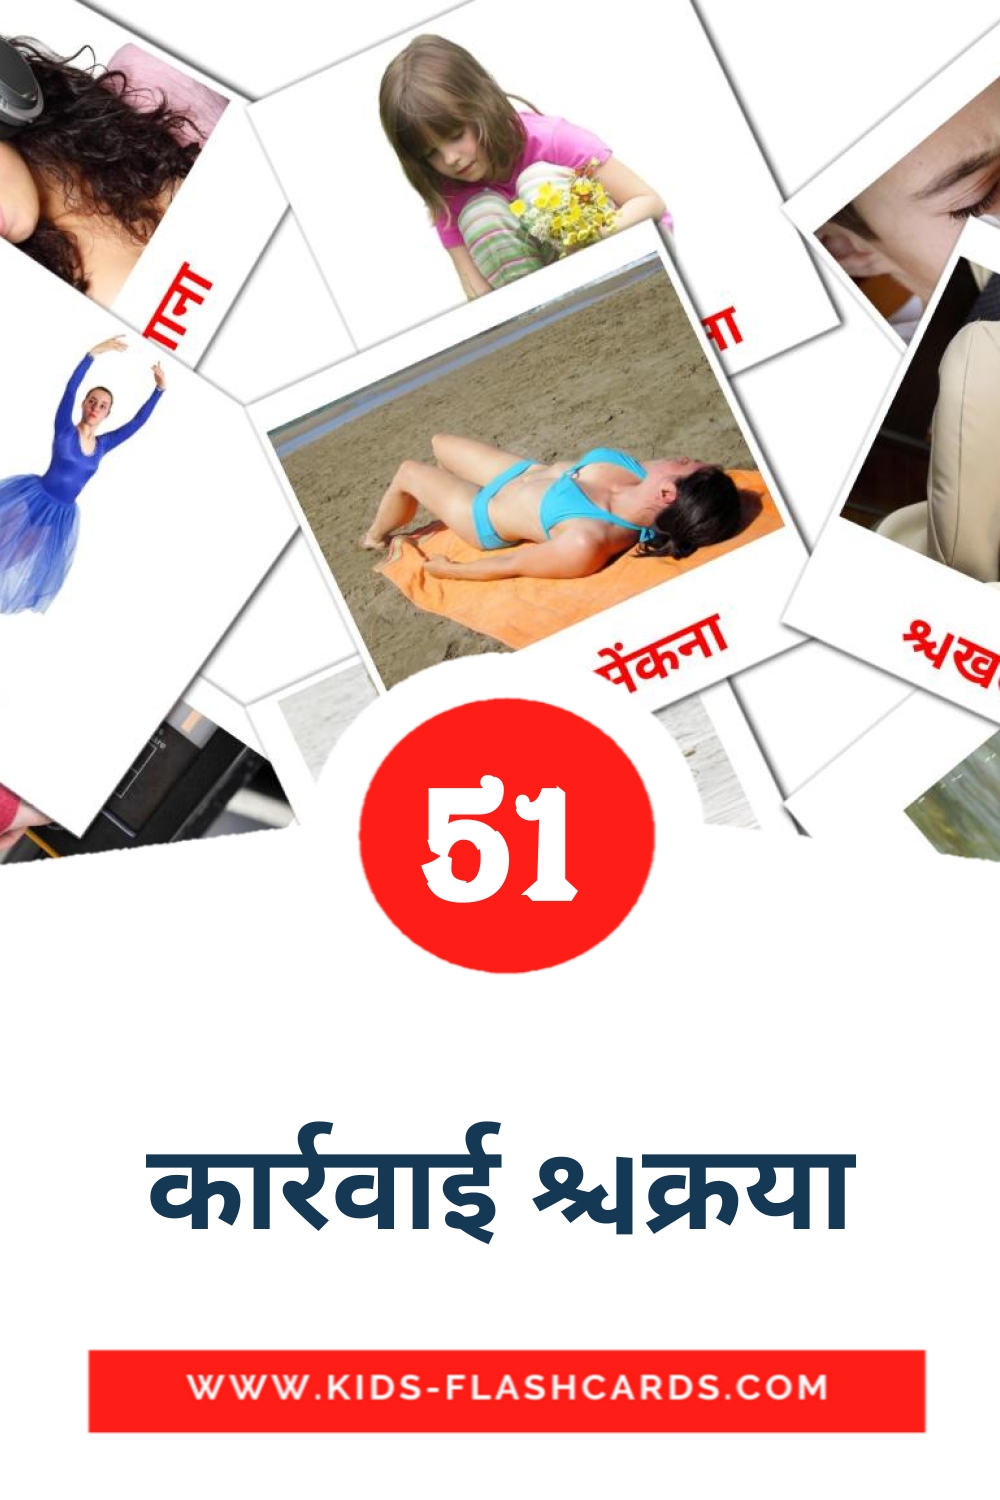 51 carte illustrate di कार्रवाई क्रिया per la scuola materna in hindi